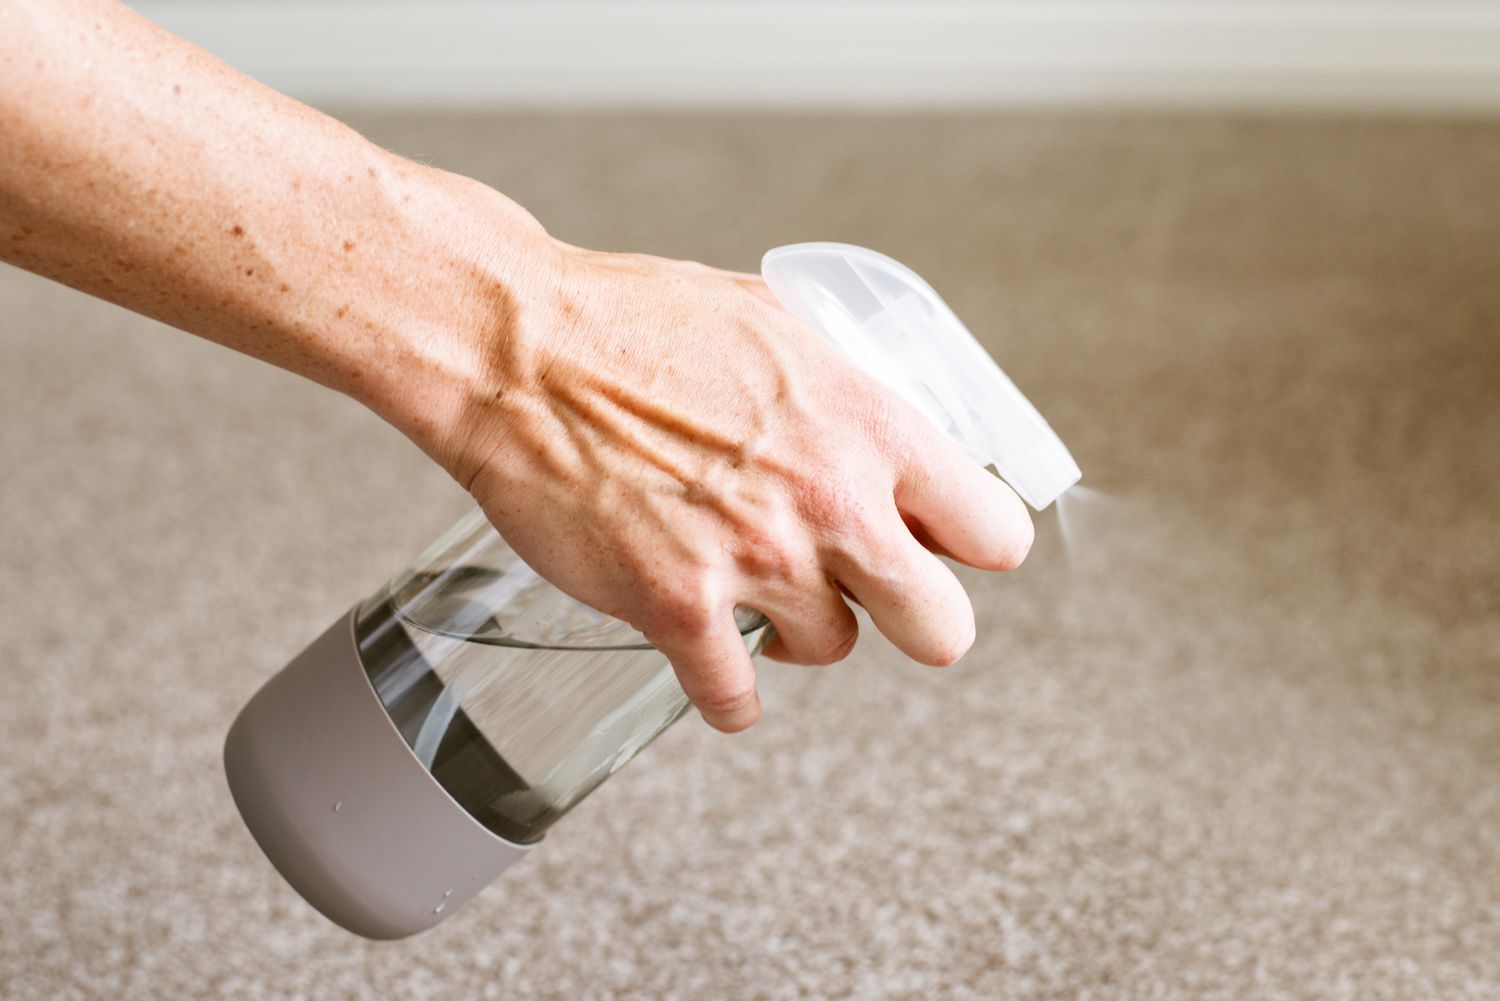 Glass spray bottle spraying solution over carpet until its damp